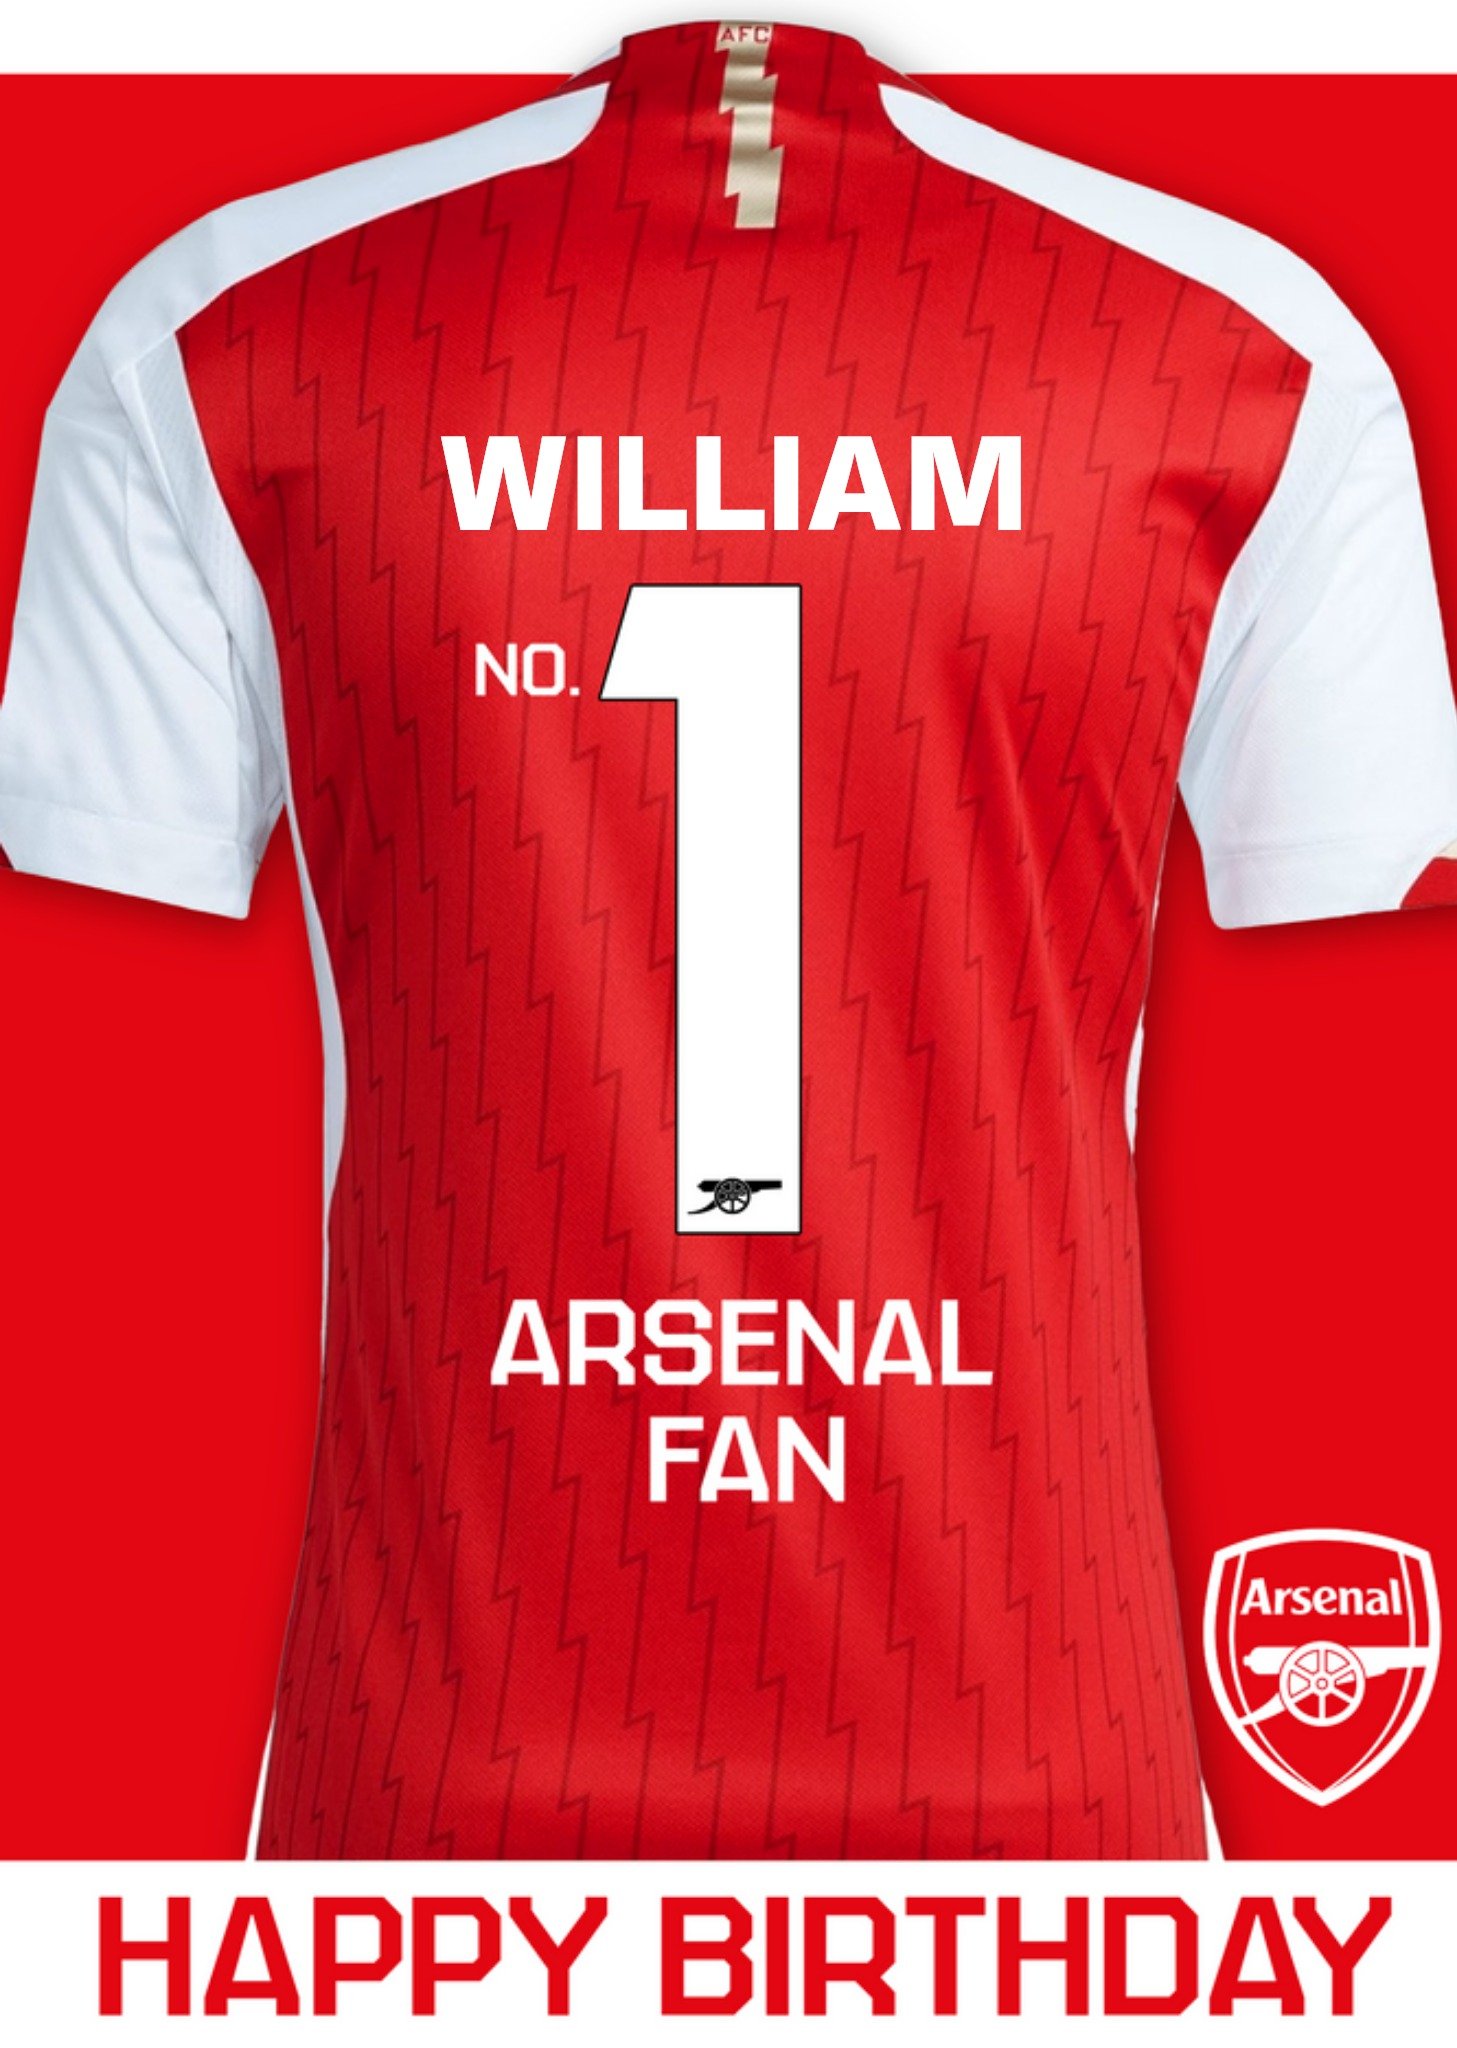 Arsenal Football Club No.1 Arsenal Fan Football Jersey Happy Birthday Card, Large